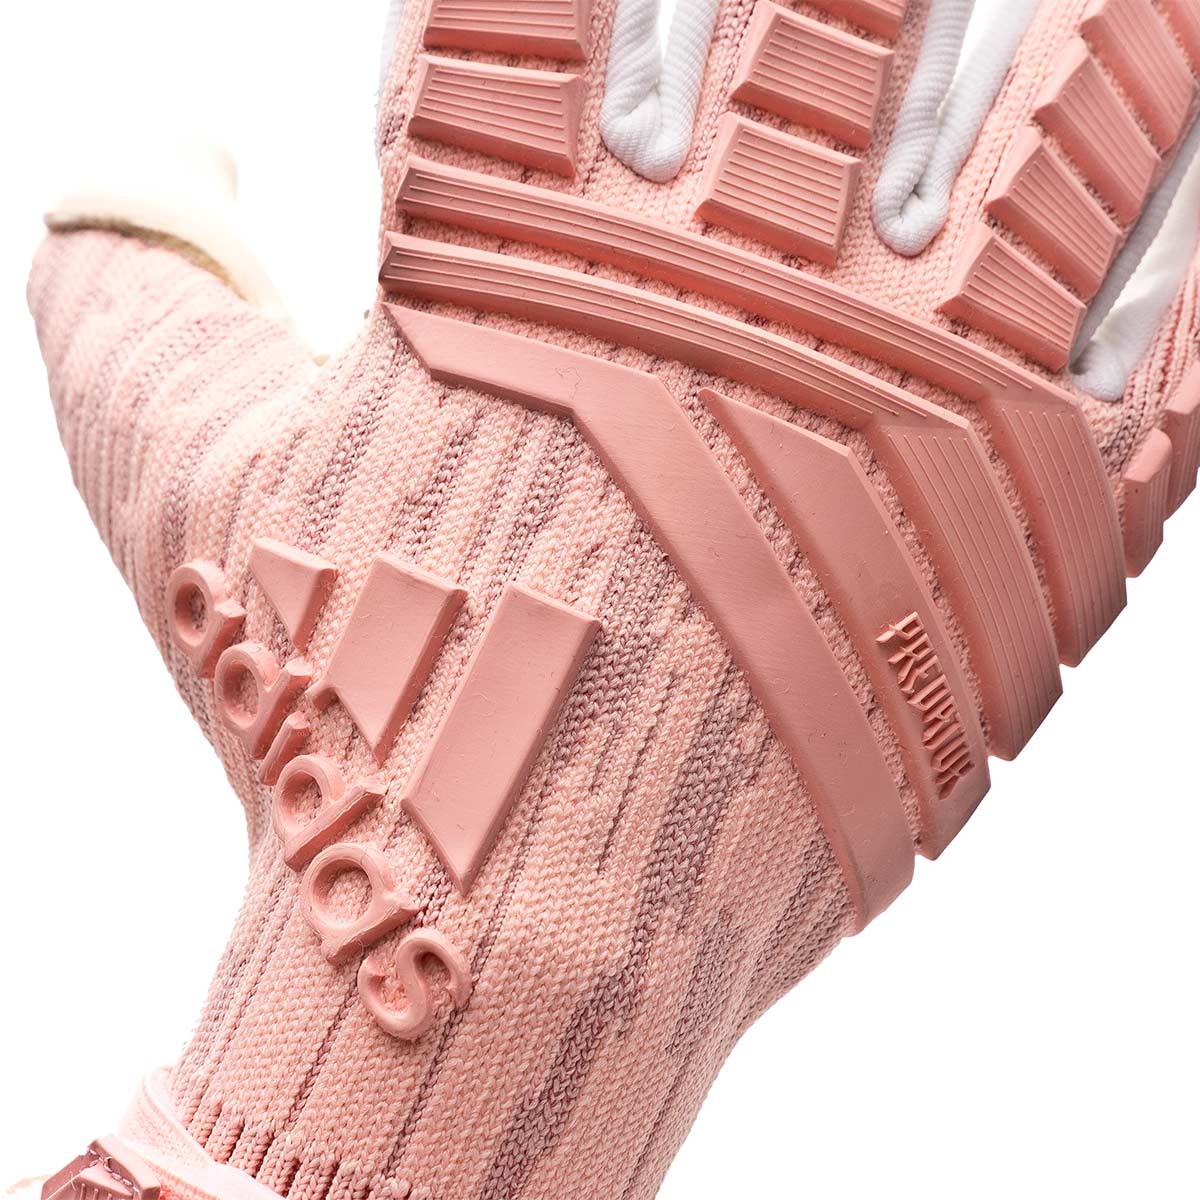 adidas predator pink goalkeeper gloves